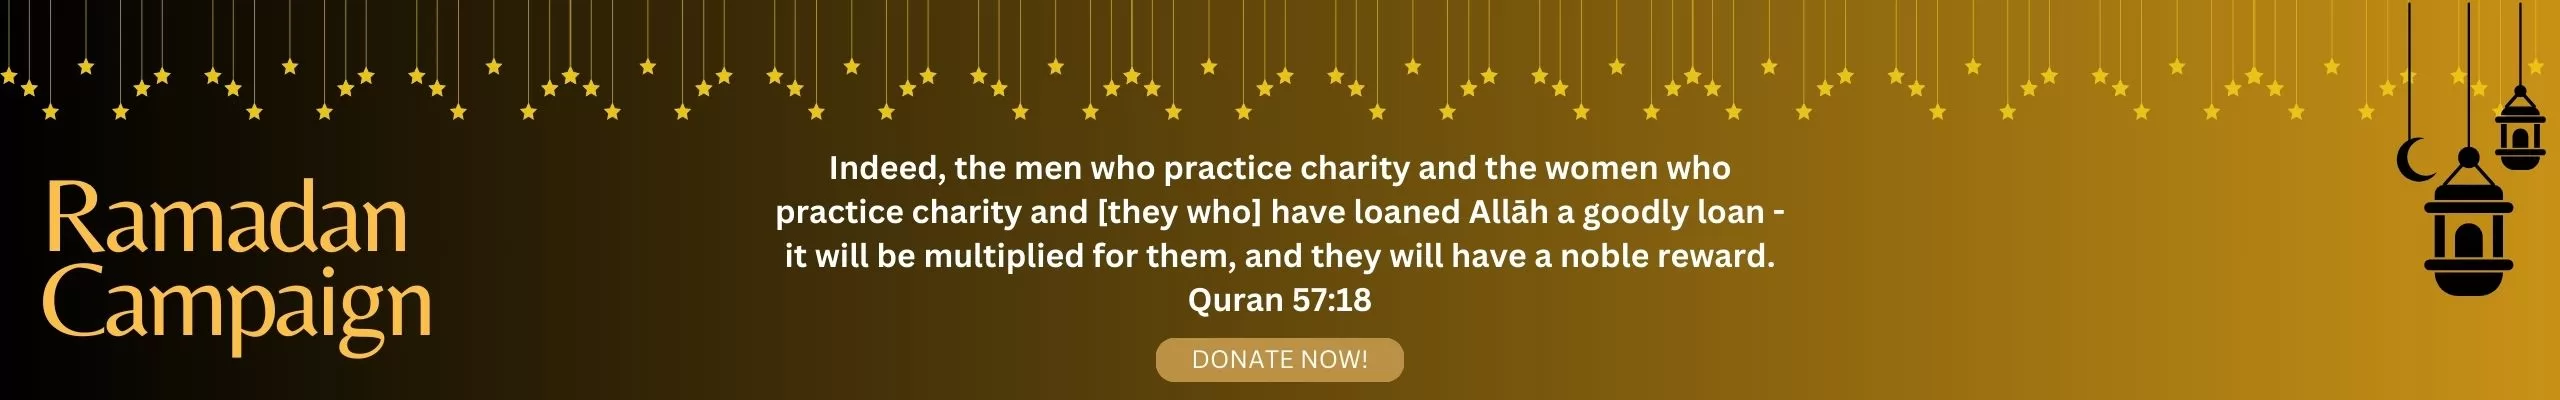 Ramadan Donation - Desktop